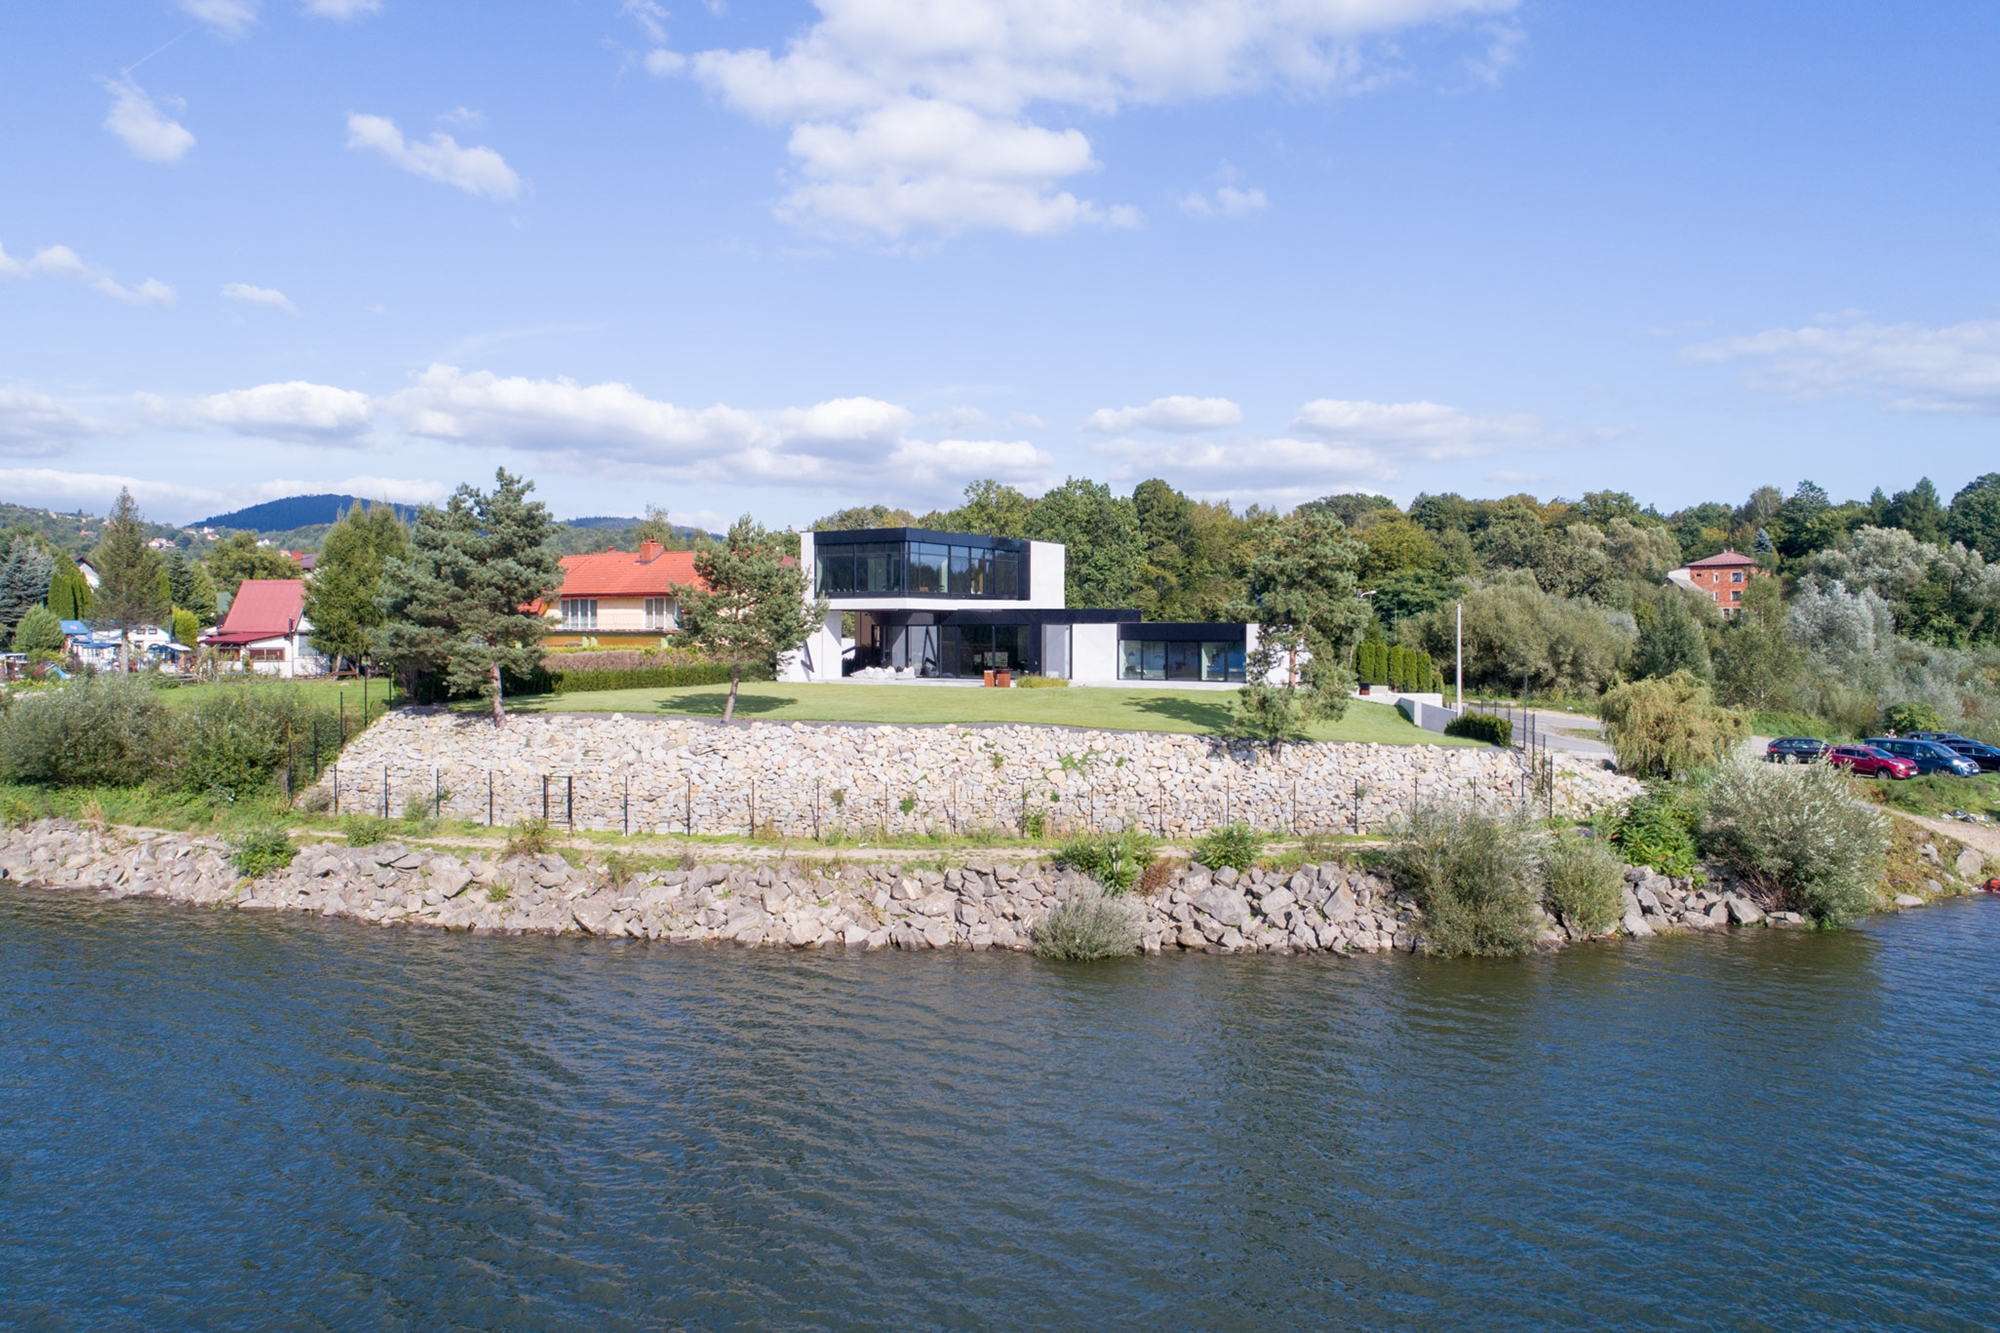 RE: Lakeside house, czyli dom nad jeziorem od REFORM Architekt